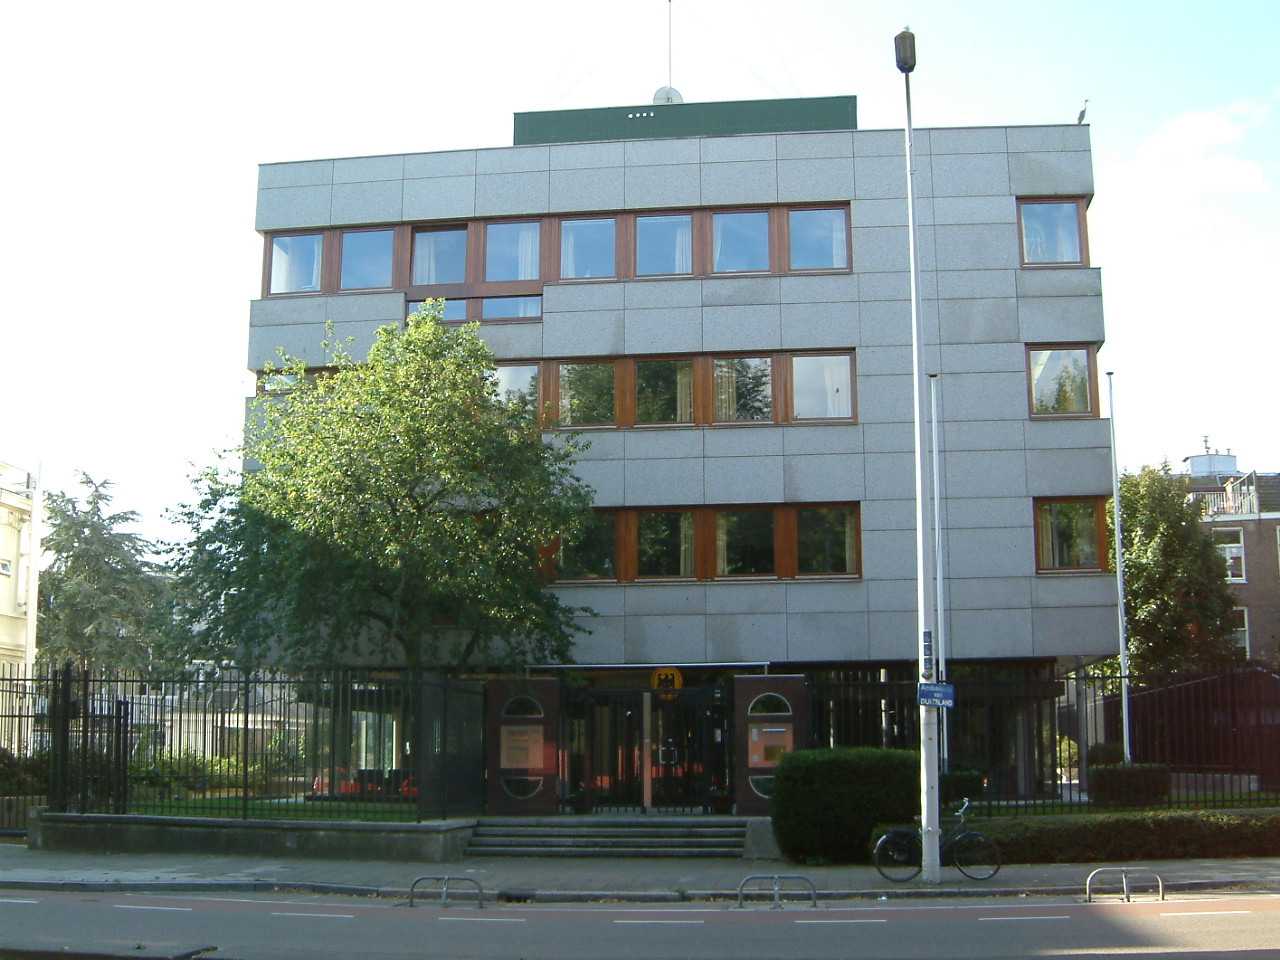 De ambassade te Den Haag